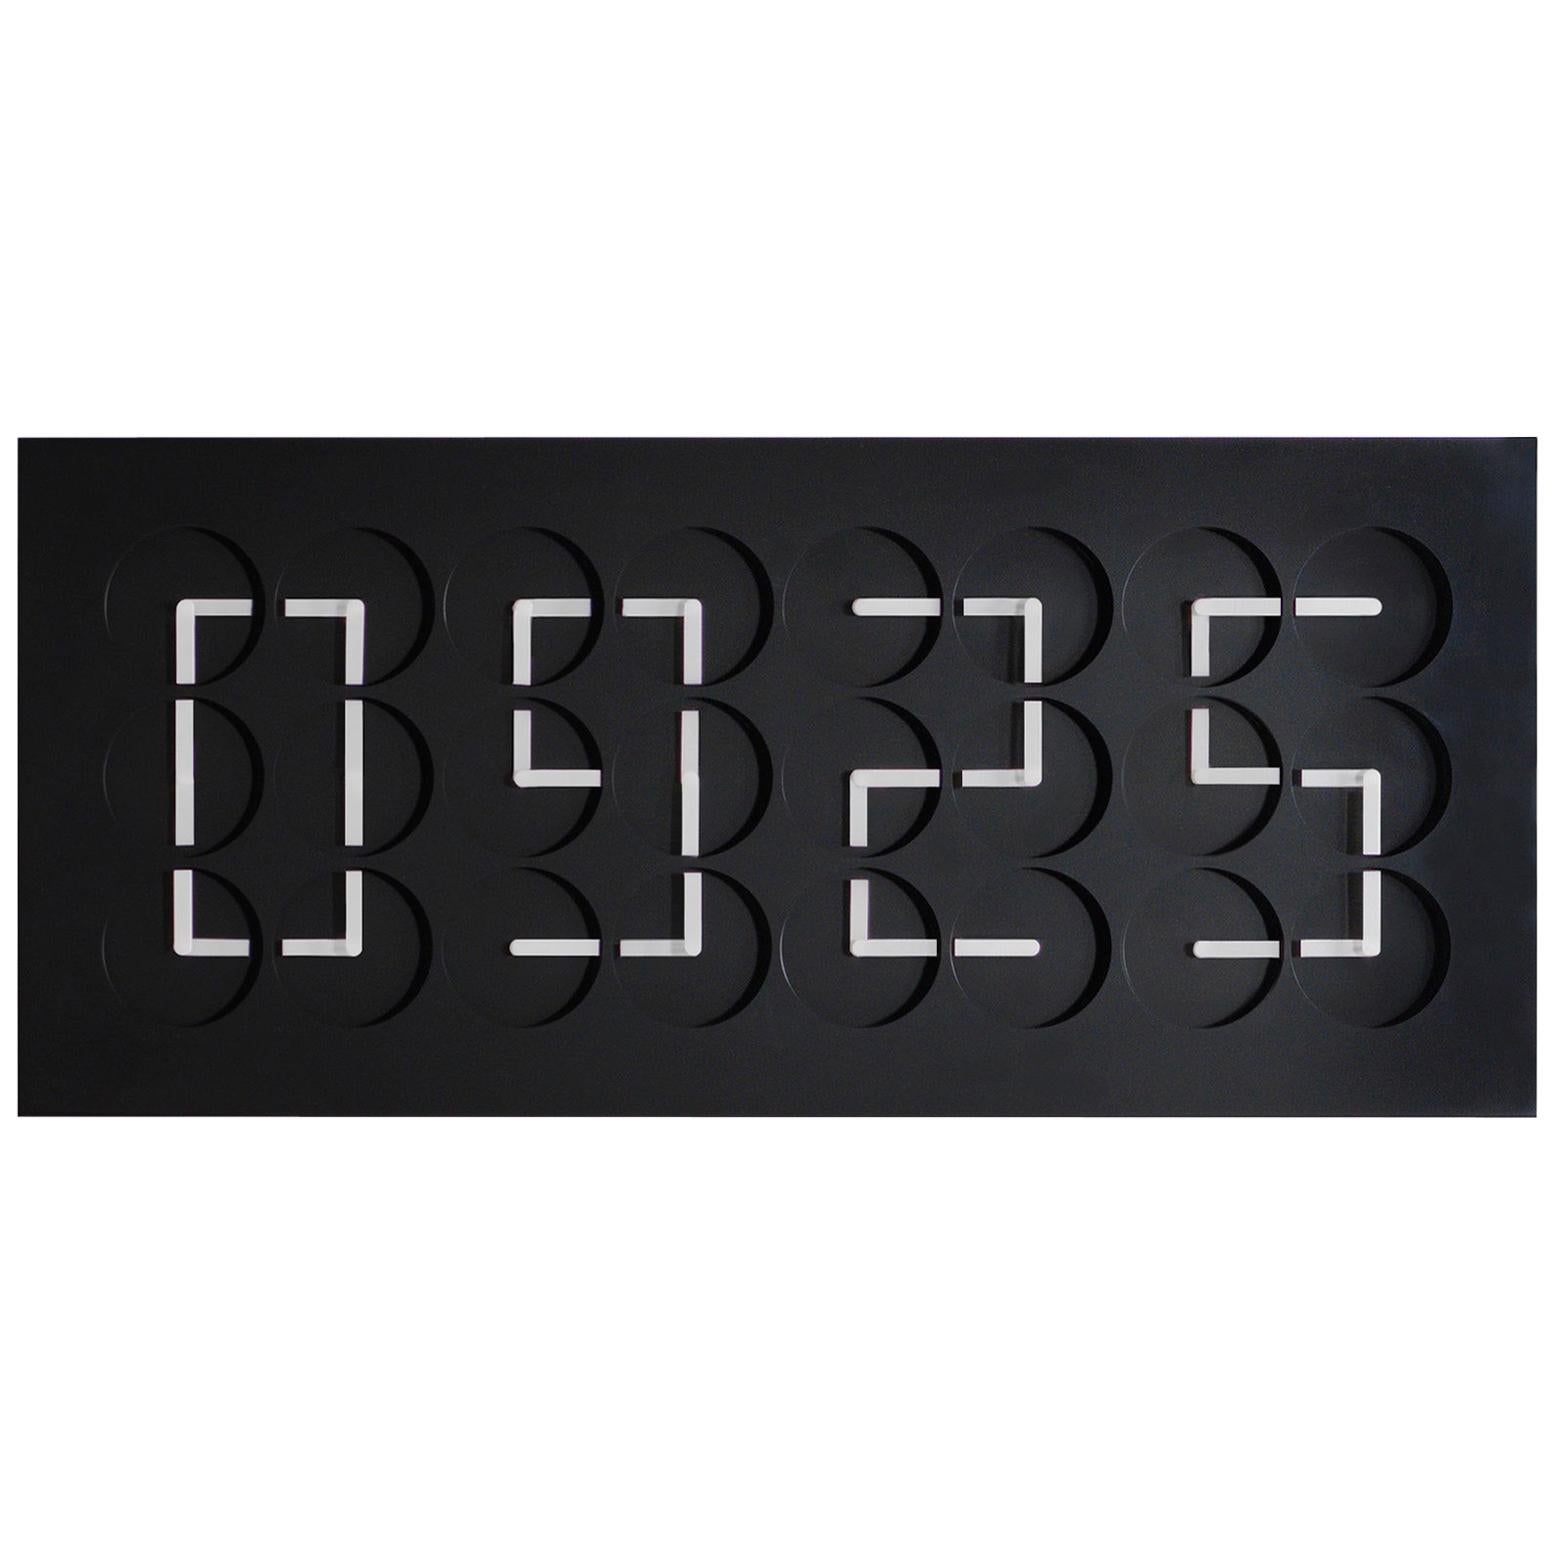 Uhr ClockClock 24 Black by Humans since 1982, kinetische Skulptur, Wanduhr